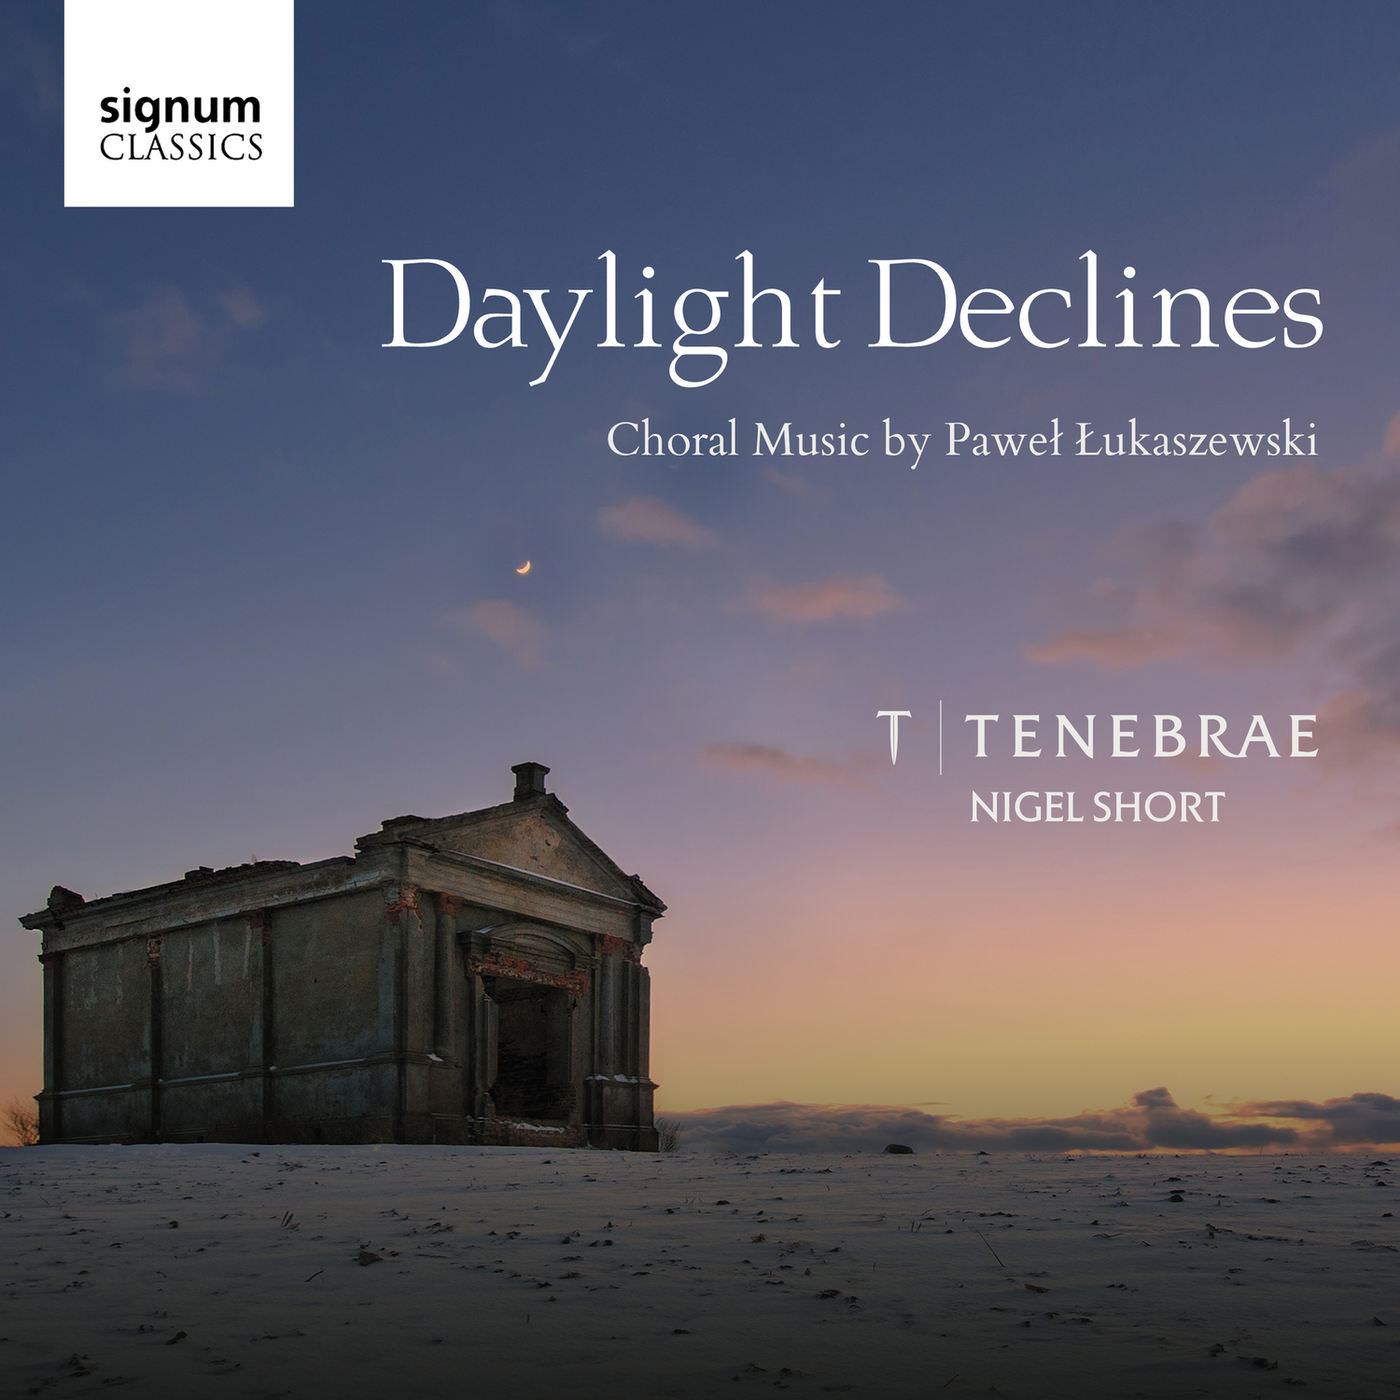 Tenebrae & Nigel Short - Daylight Declines: Choral Music by Pawel Lukaszewski (2018) [FLAC 24bit/96kHz]